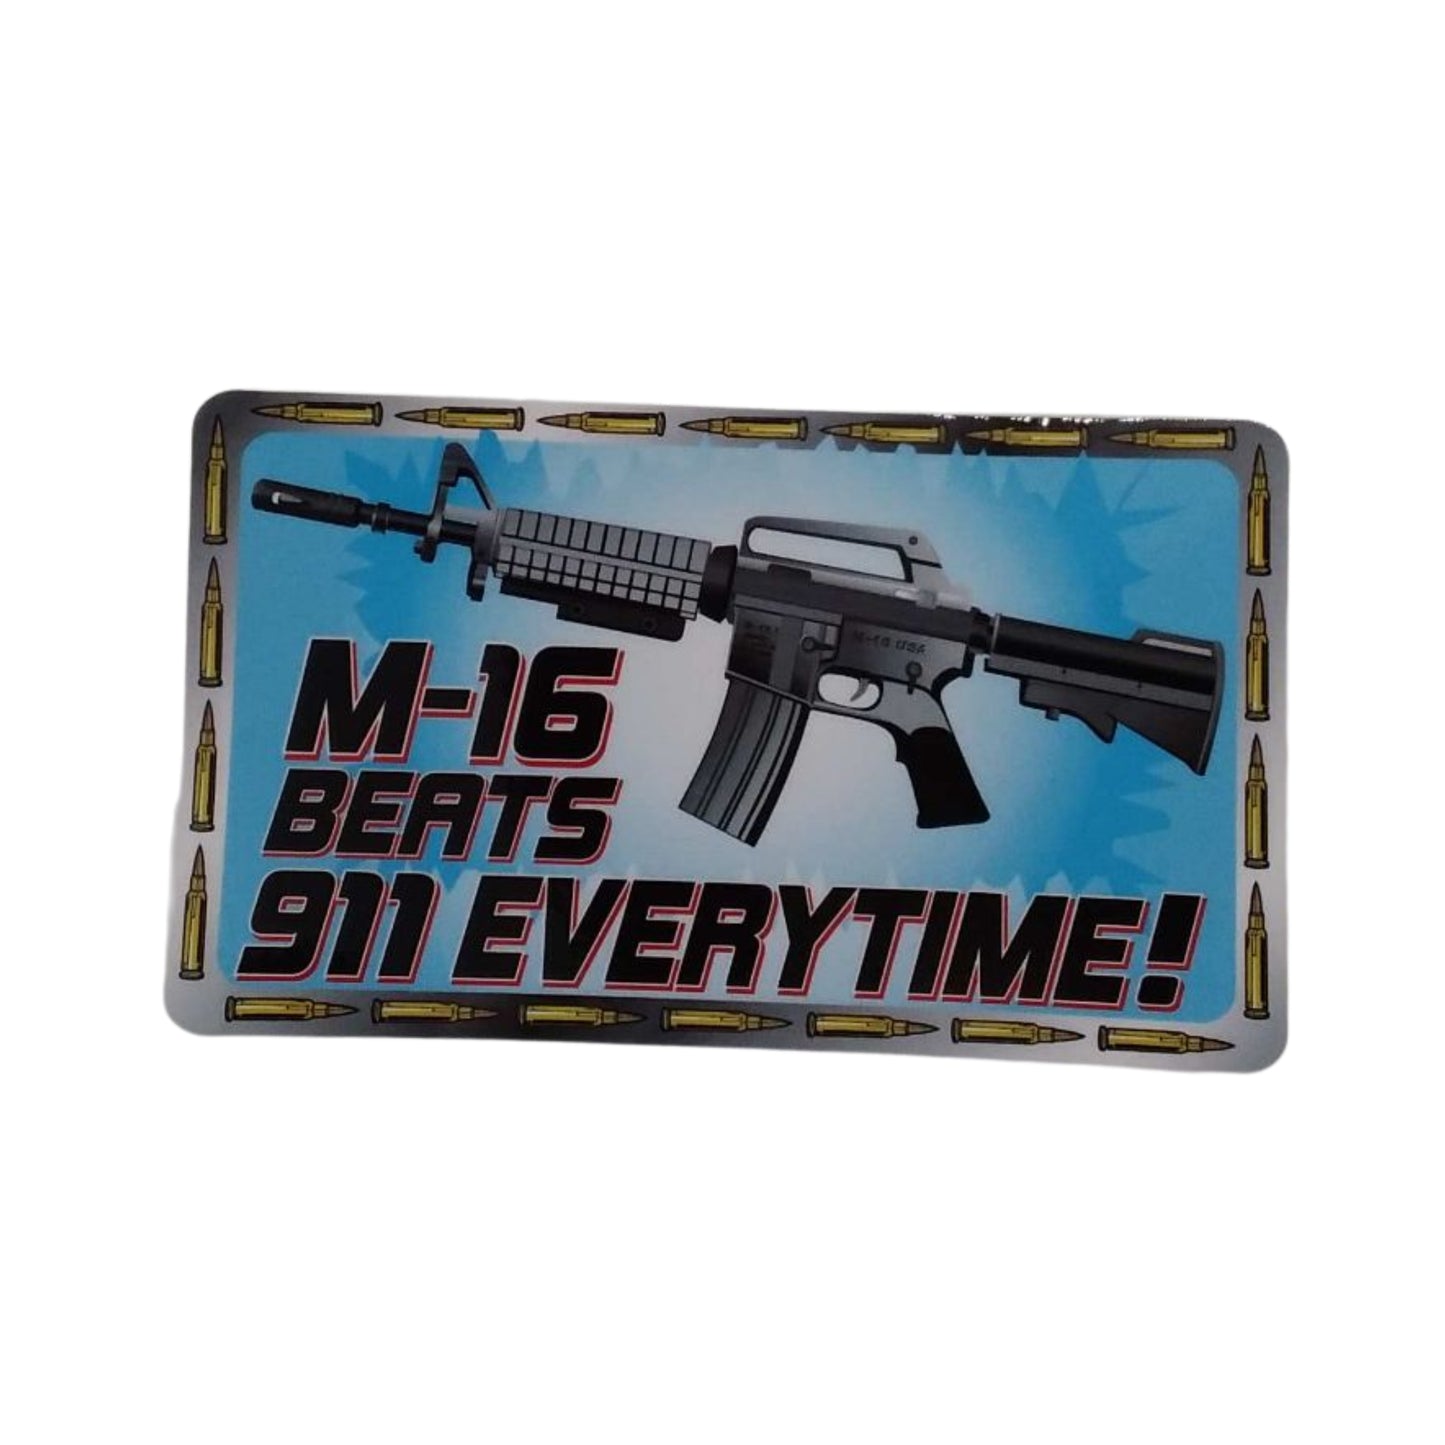 M-16 Beats 911 Everytime! - Sticker